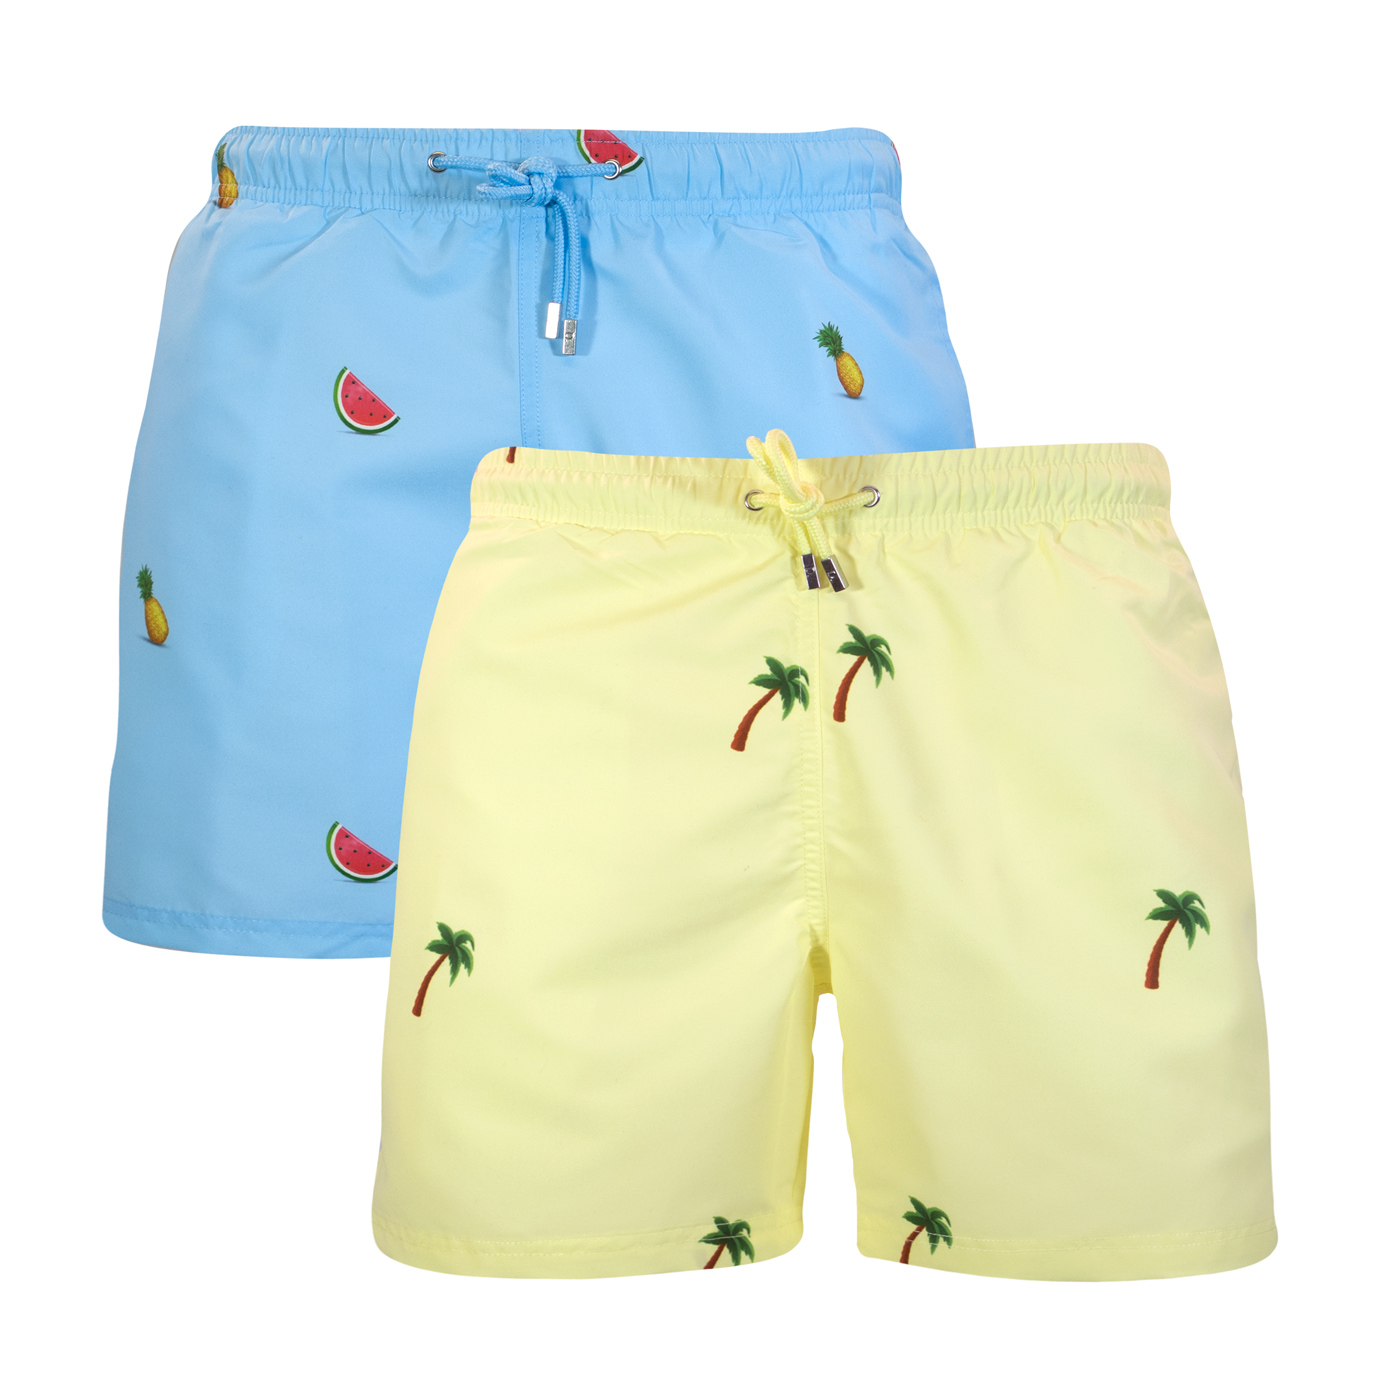 Palm watermelon pineapple tropical swim shorts